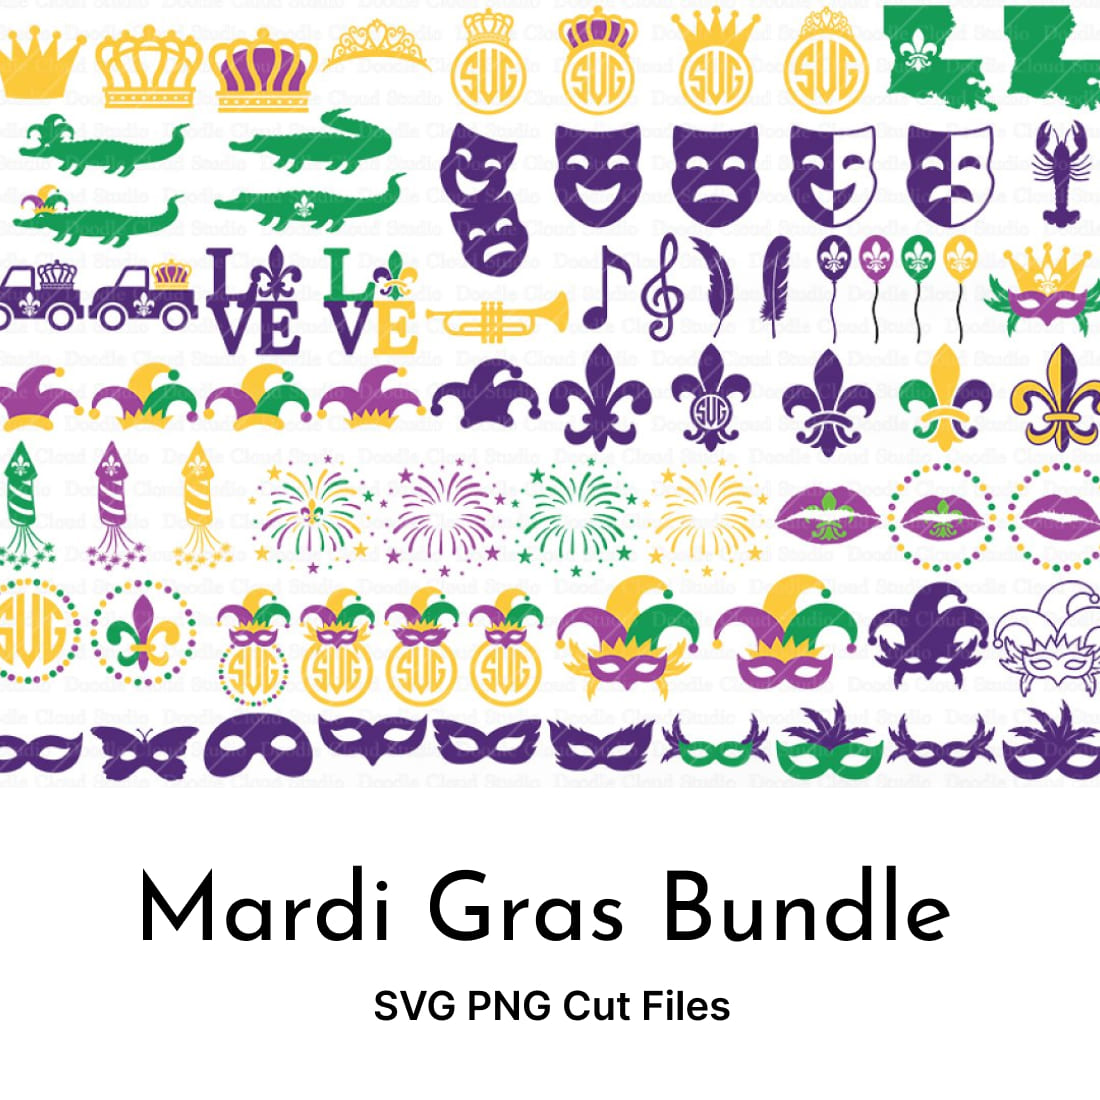 Mardi Gras Bundle SVG PNG Cut Files.